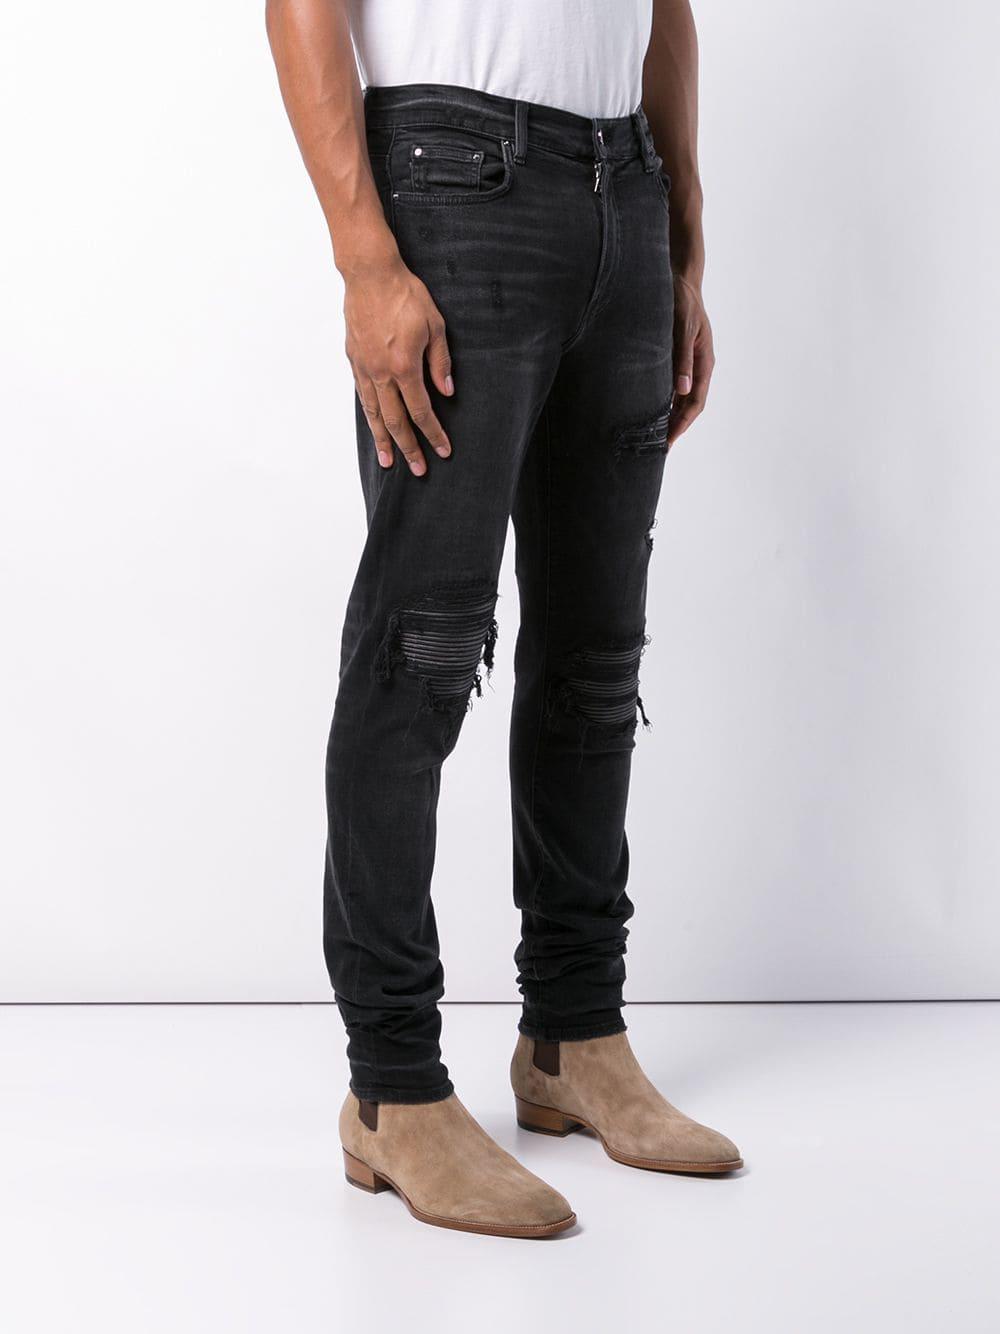 Amiri Denim Ripped Slim Fit Jeans in Black for Men - Lyst